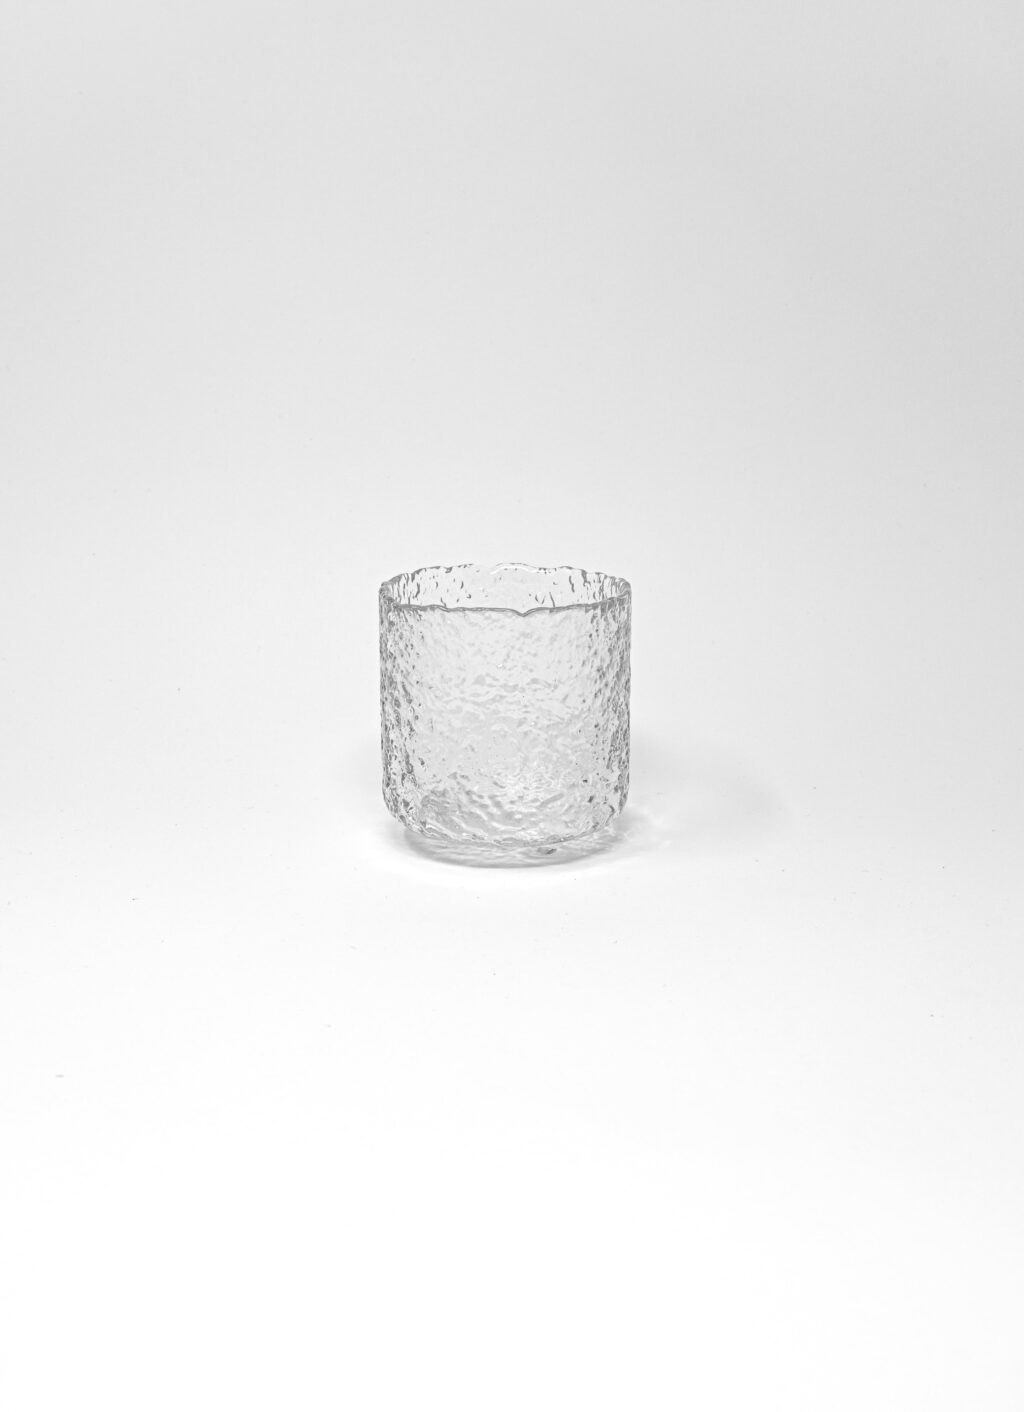 Ichendorf Milano - Denis Guidone - Ice series - Glass